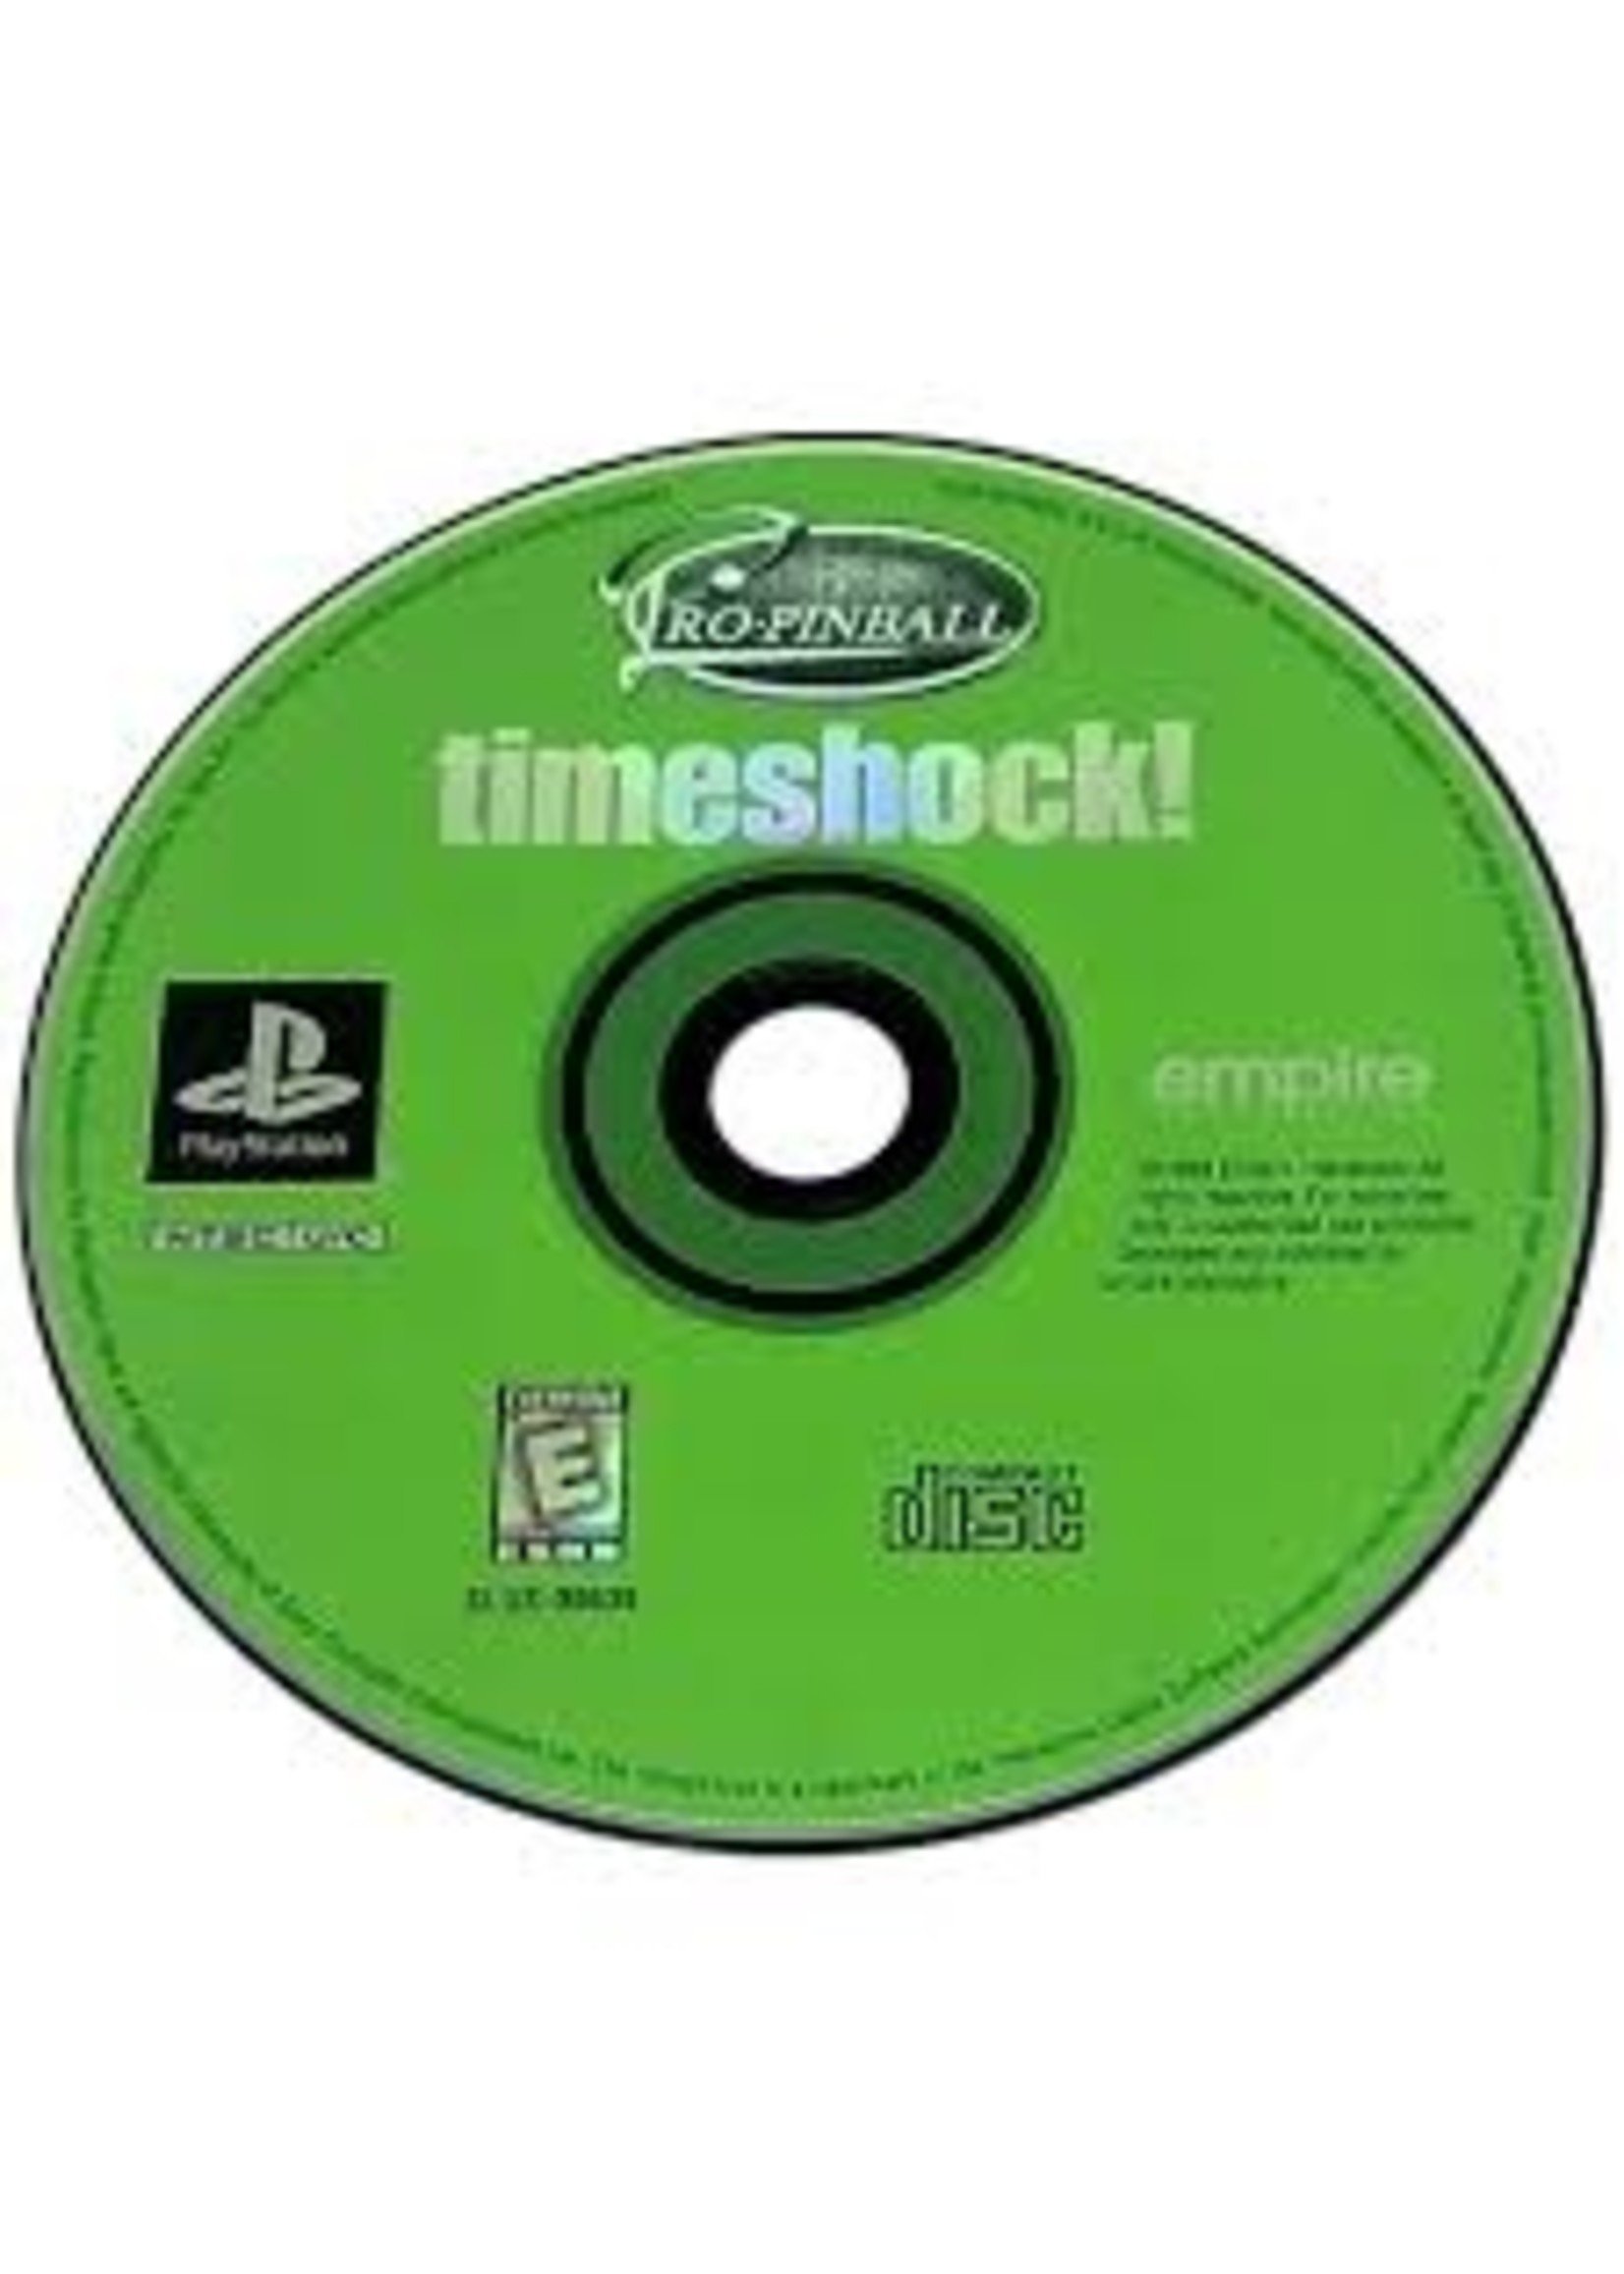 Sony Playstation 1 (PS1) Pro Pinball Timeshock - Print